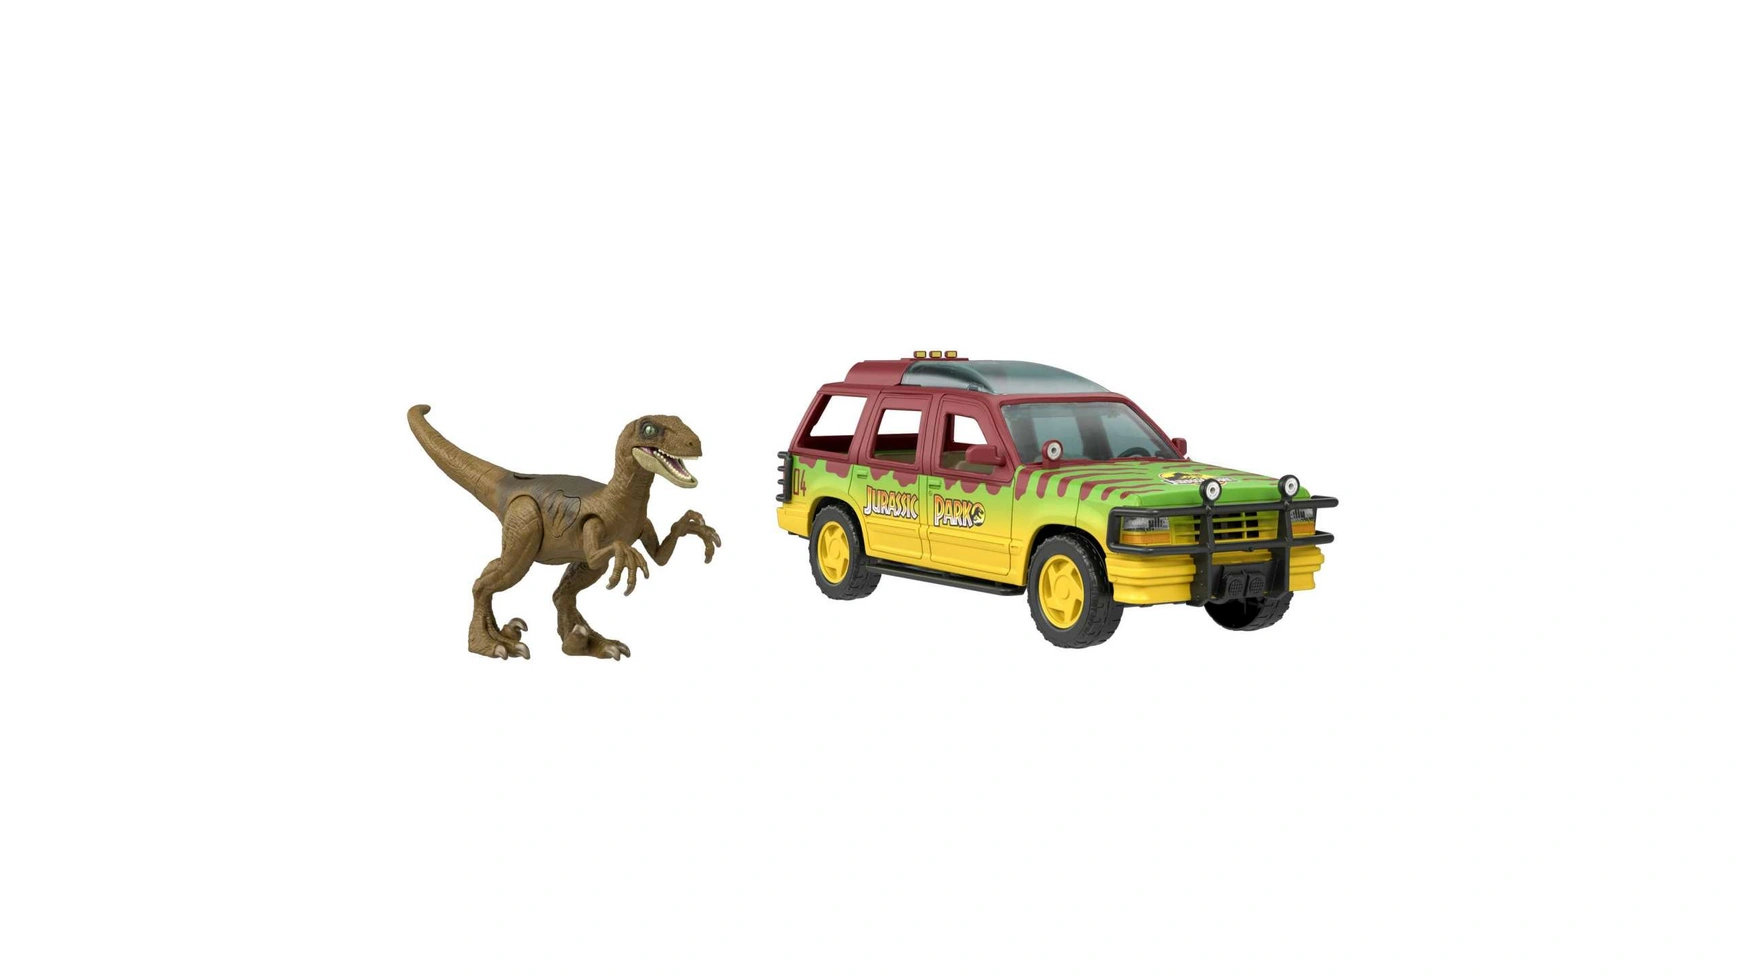 Jurassic World Epic Attack, Ford Explorer + Велоцираптор с подсветкой и звуком фигурки мини динозавров jurassic world 3 шт в наборе